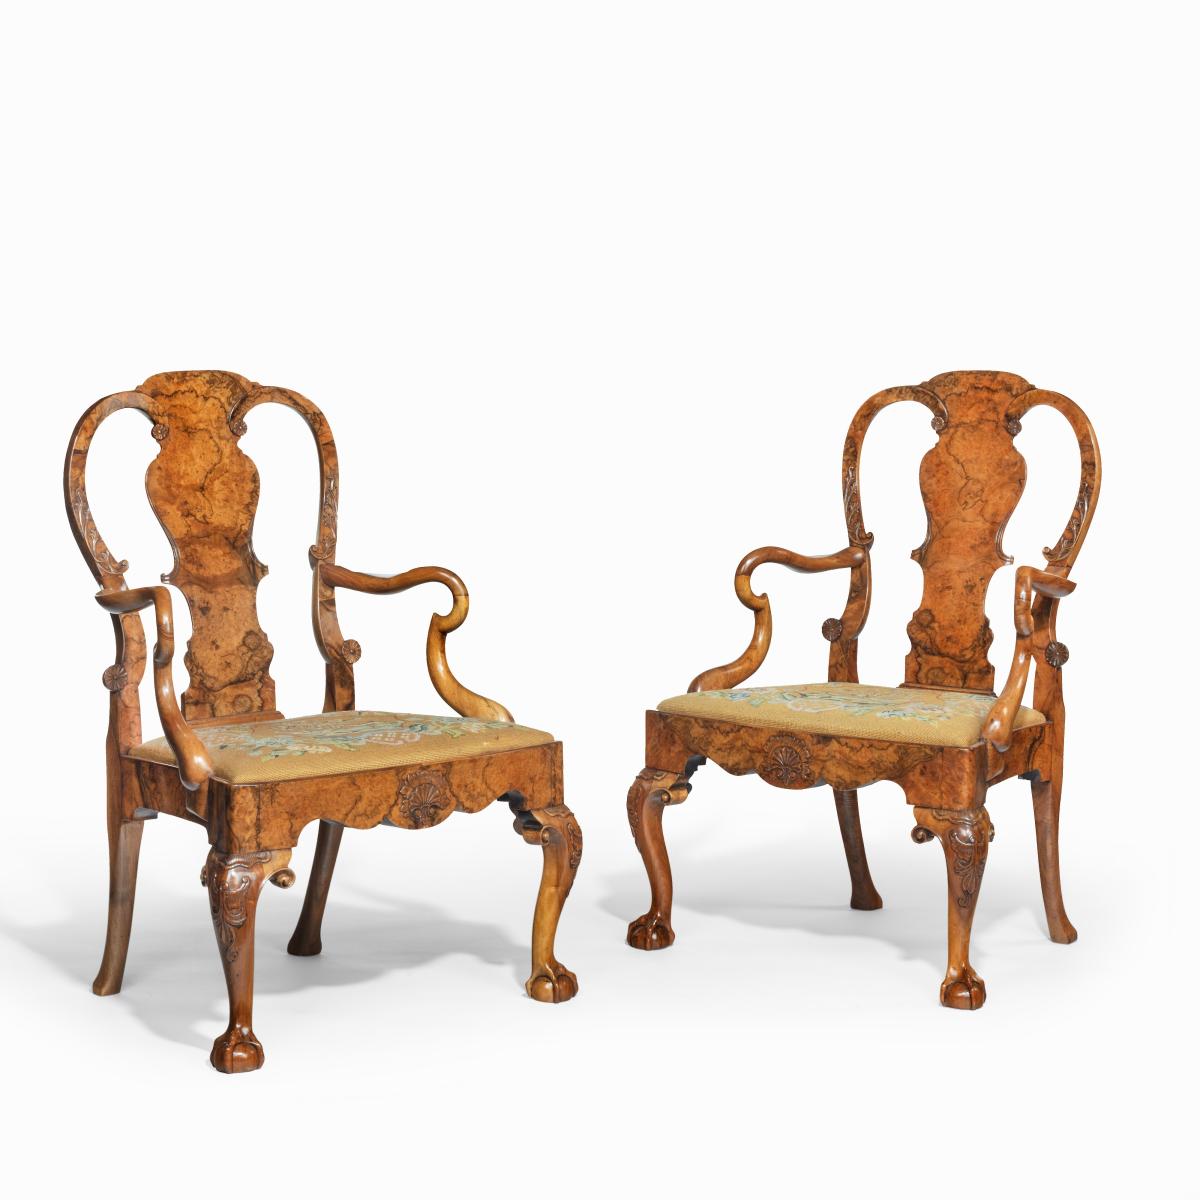 George II style walnut open arm chairs